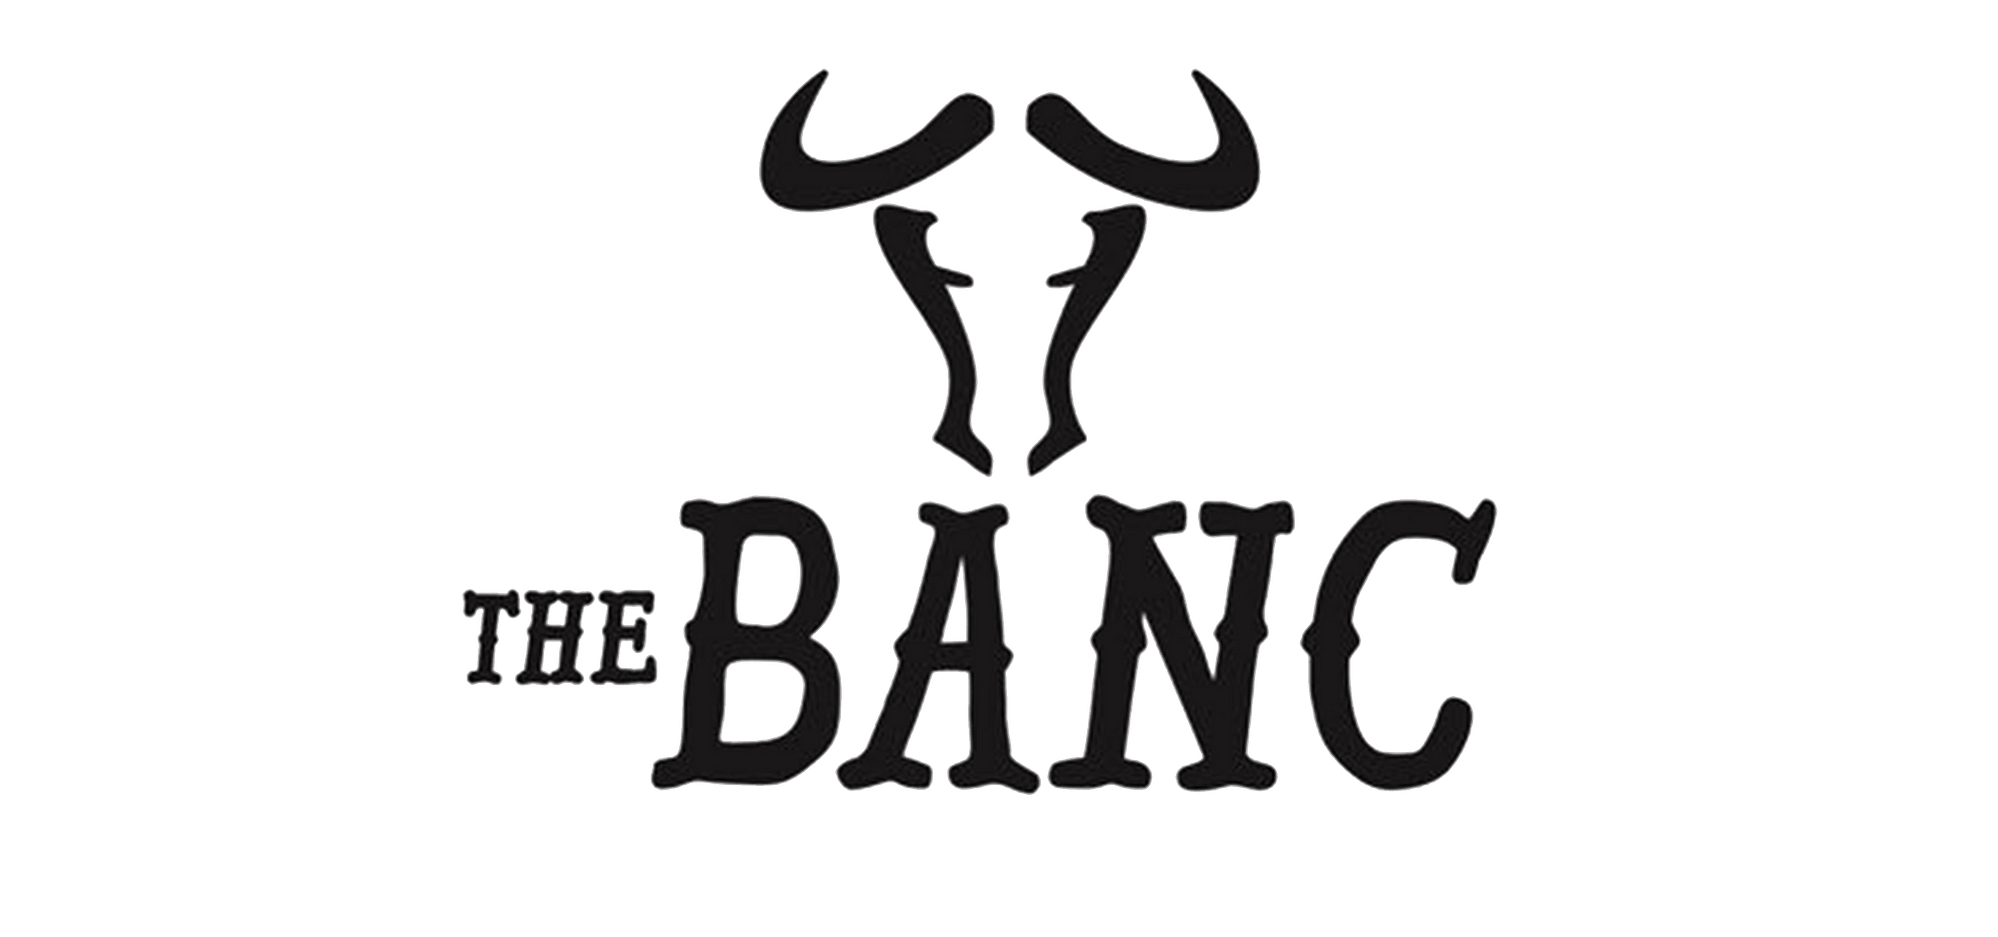 The banc